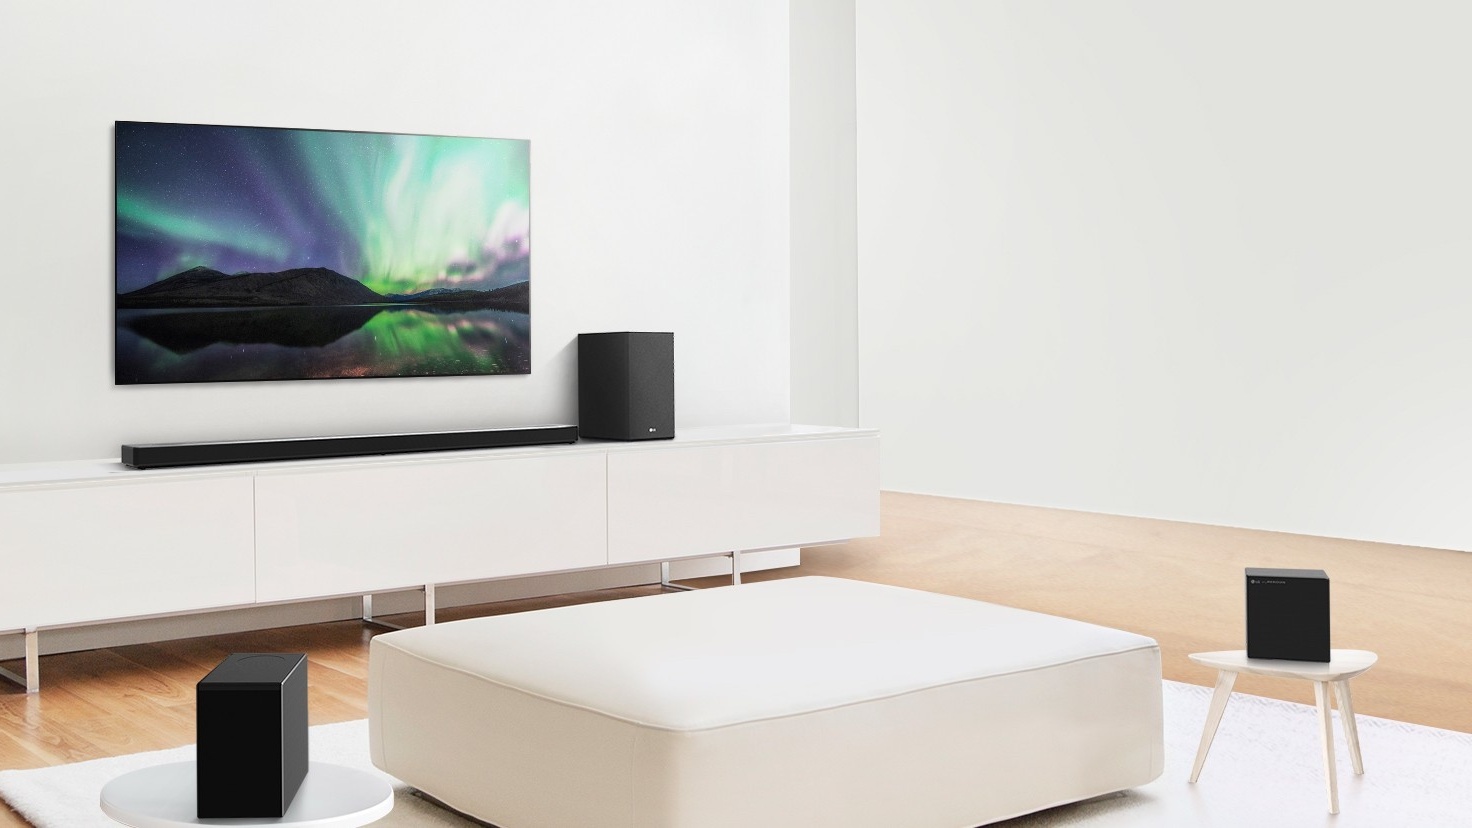 Should you buy an LG soundbar? | What Hi-Fi?